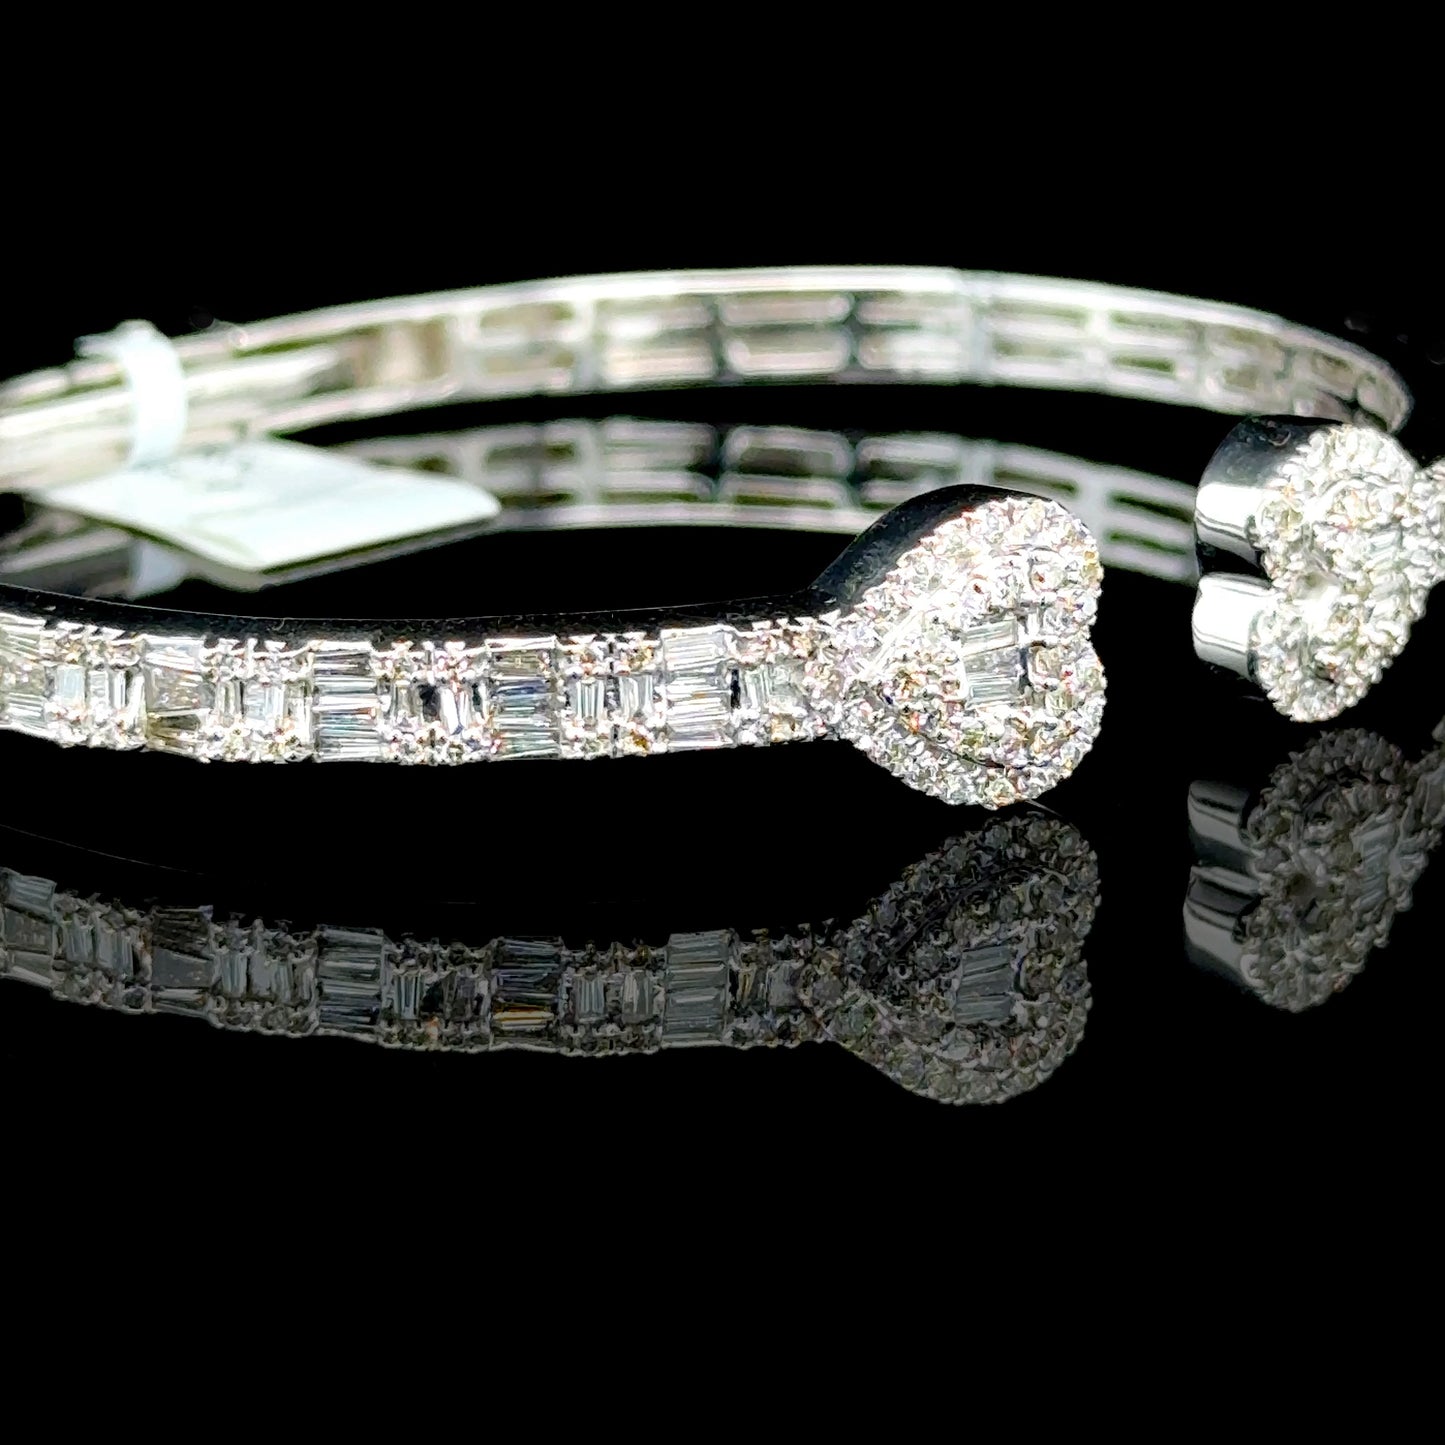 White gold diamond bangle with heart design, 1.83 carats of diamonds